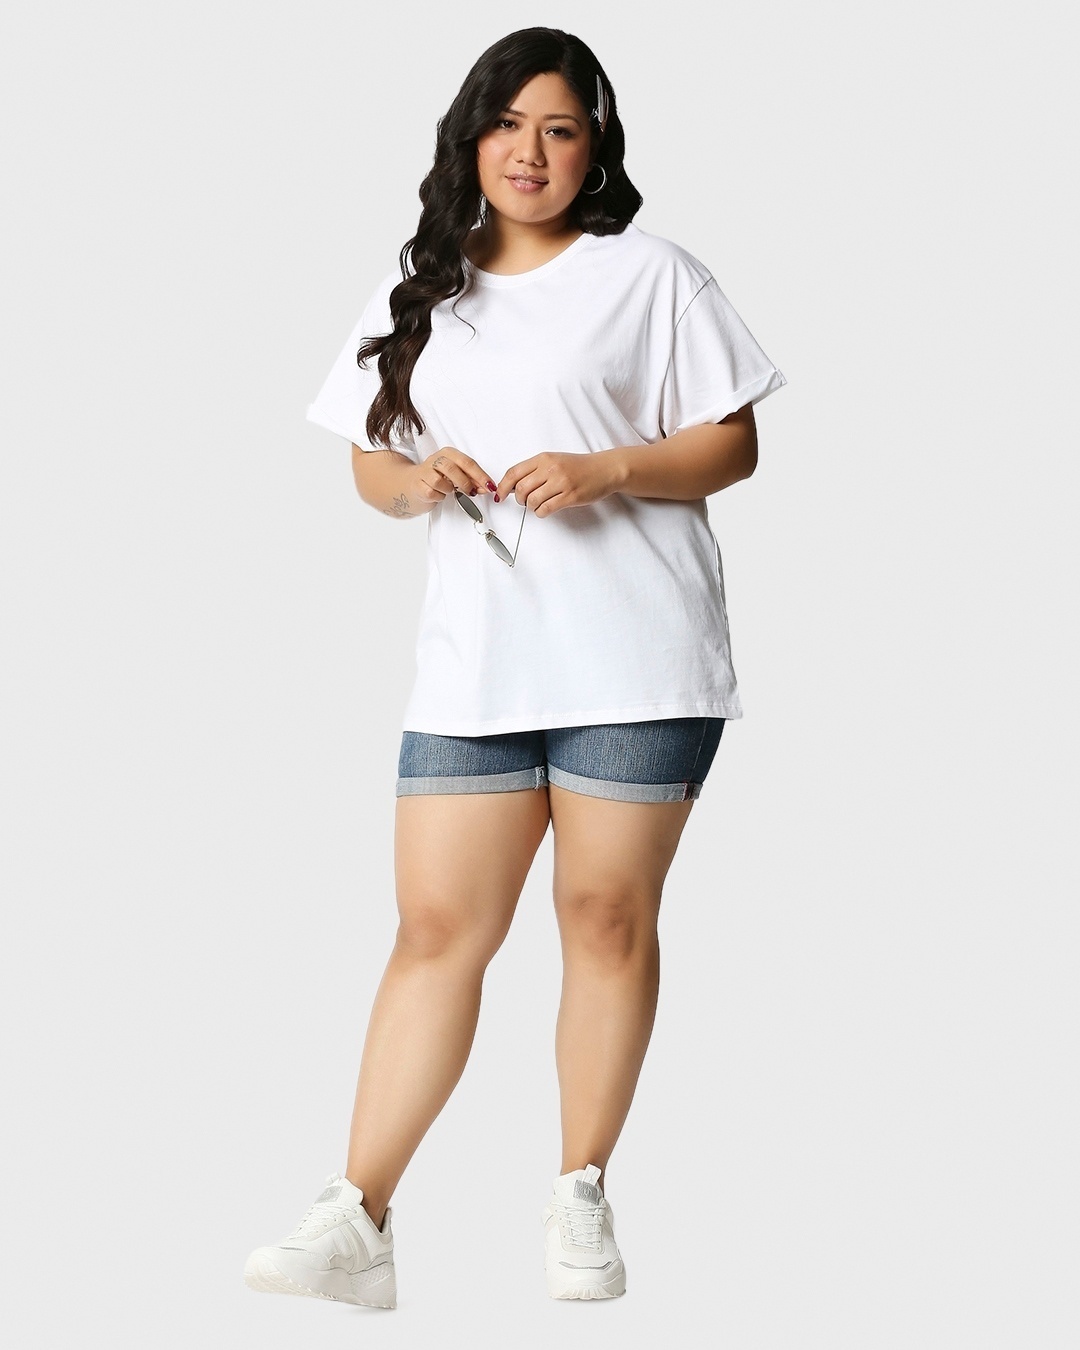 Shop Women's Black & White Plus Size Boyfriend T-shirt (Pack of 2)